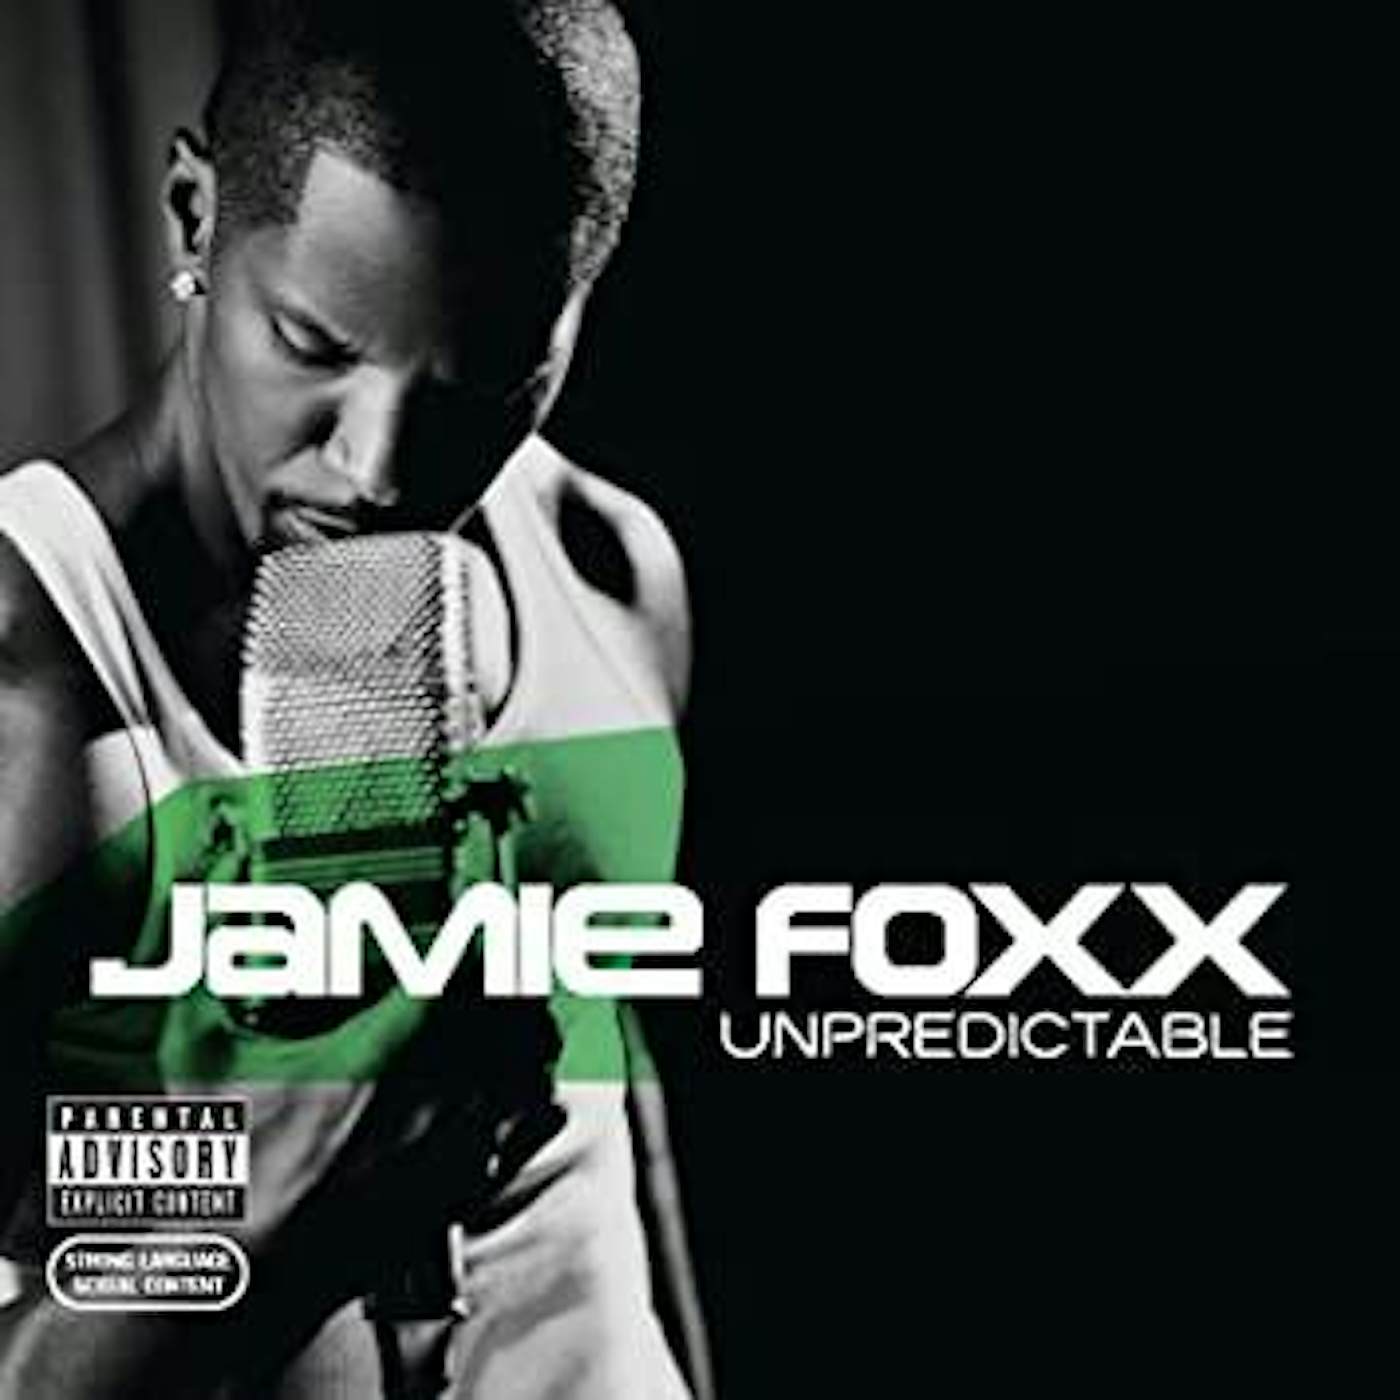 Jamie Foxx UNPREDICTABLE CD